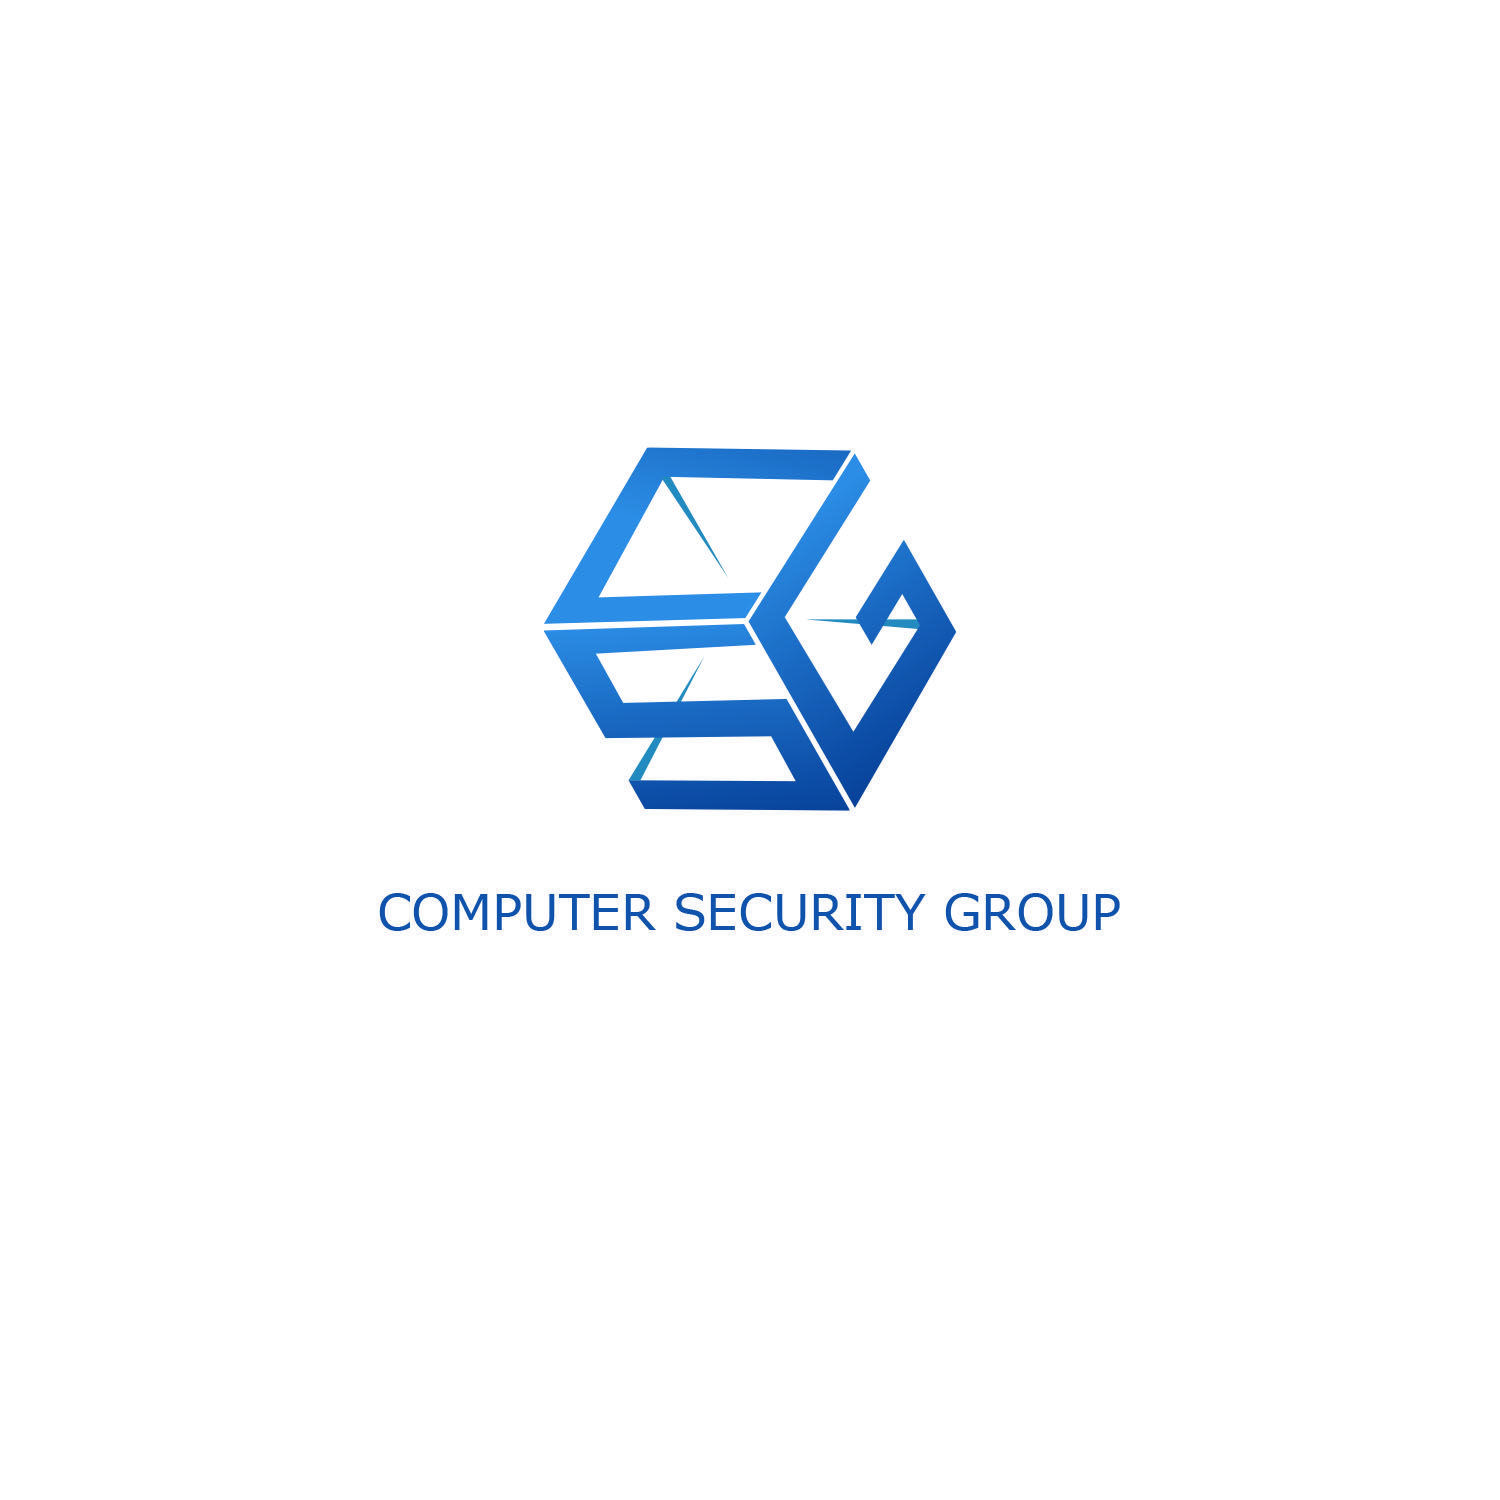 Computer Security Logo - Professional, Serious, Computer Security Logo Design for Computer ...